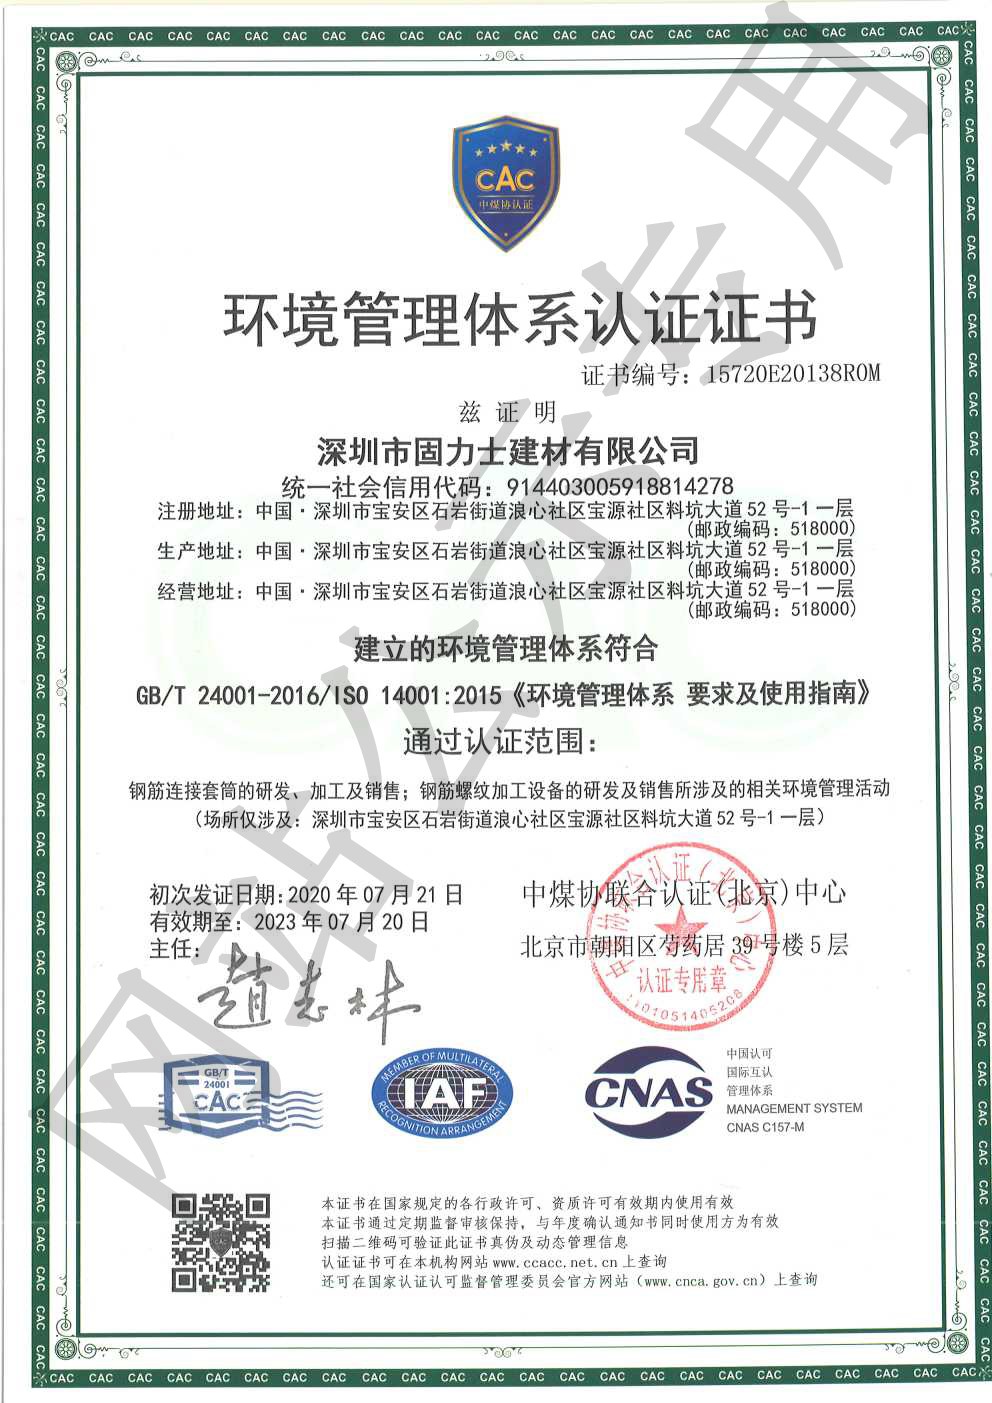 本溪ISO14001证书